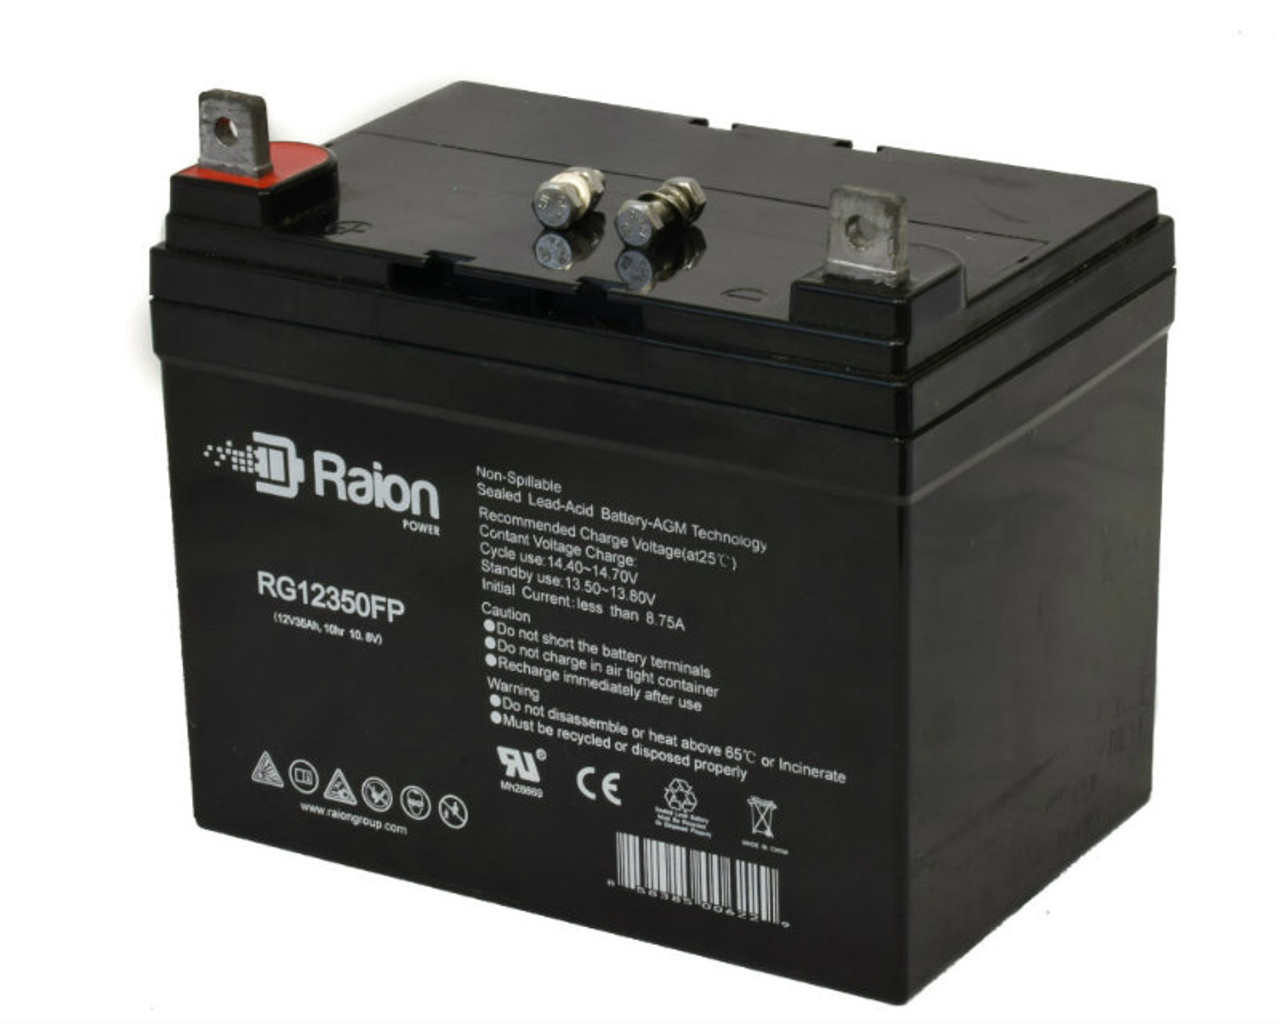 Raion Power Replacement 12V 35Ah RG12350FP Battery for Kubota T1560